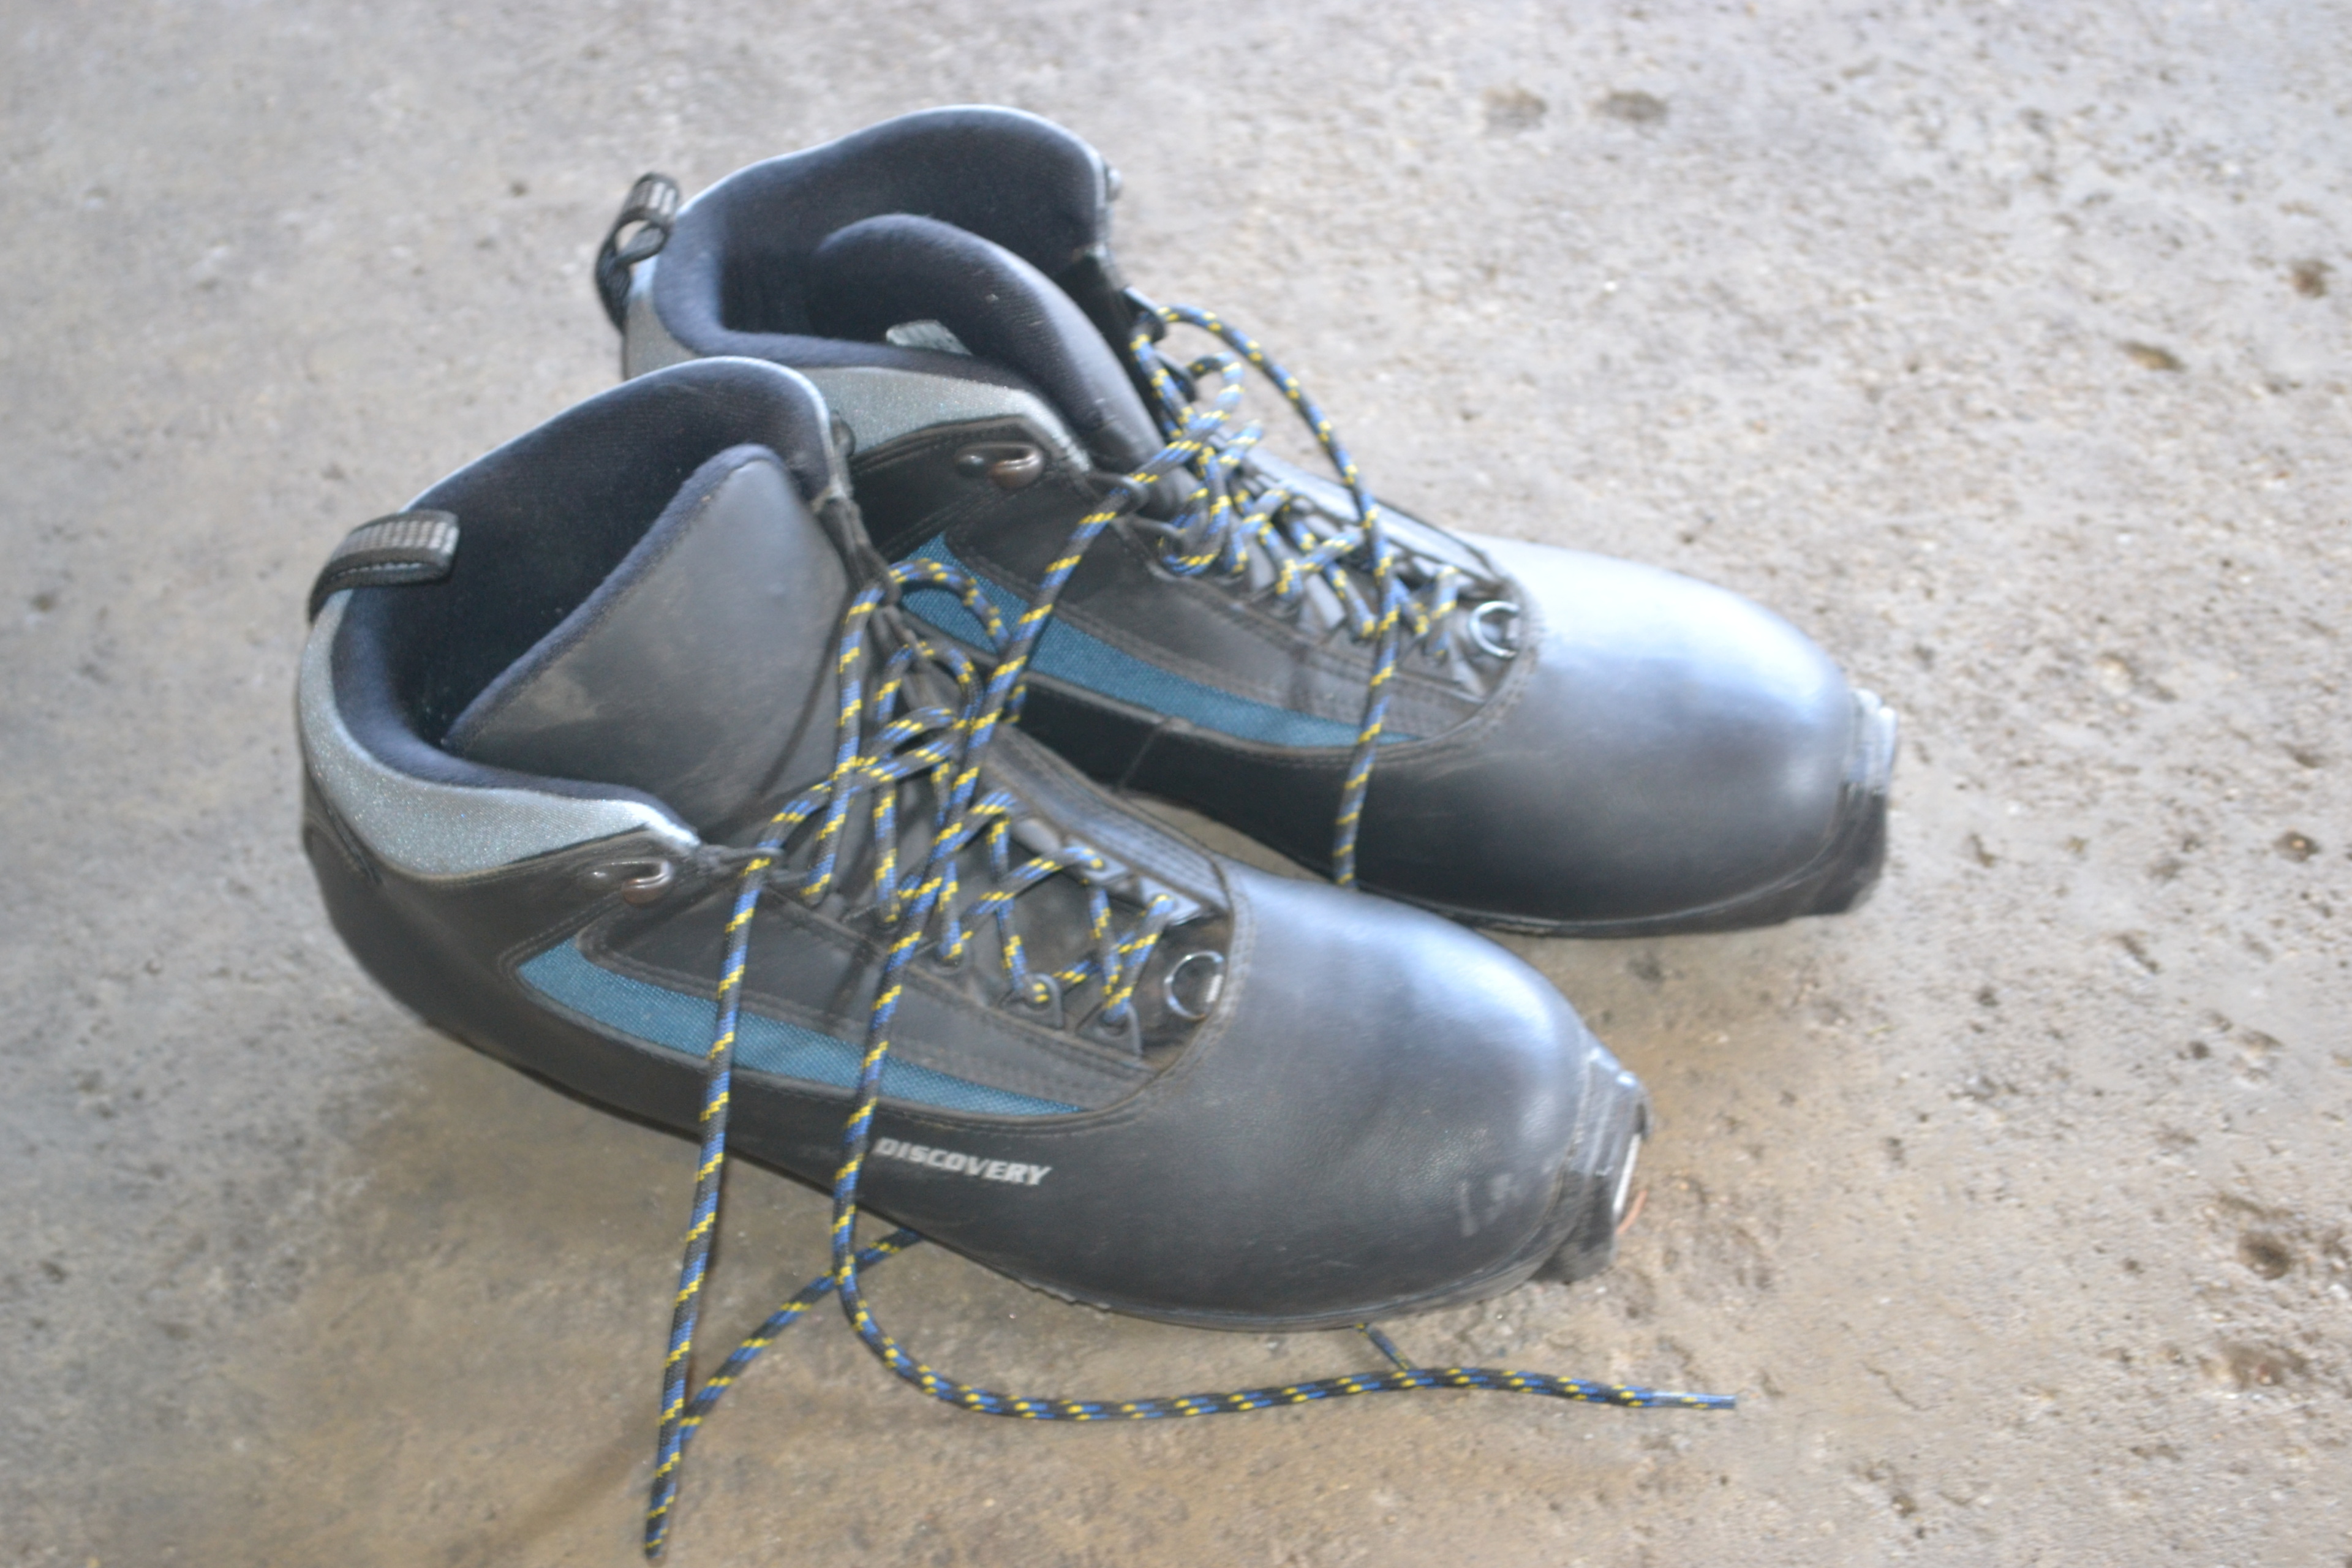 Men's Karhu Discovery Cross Country Ski Boots